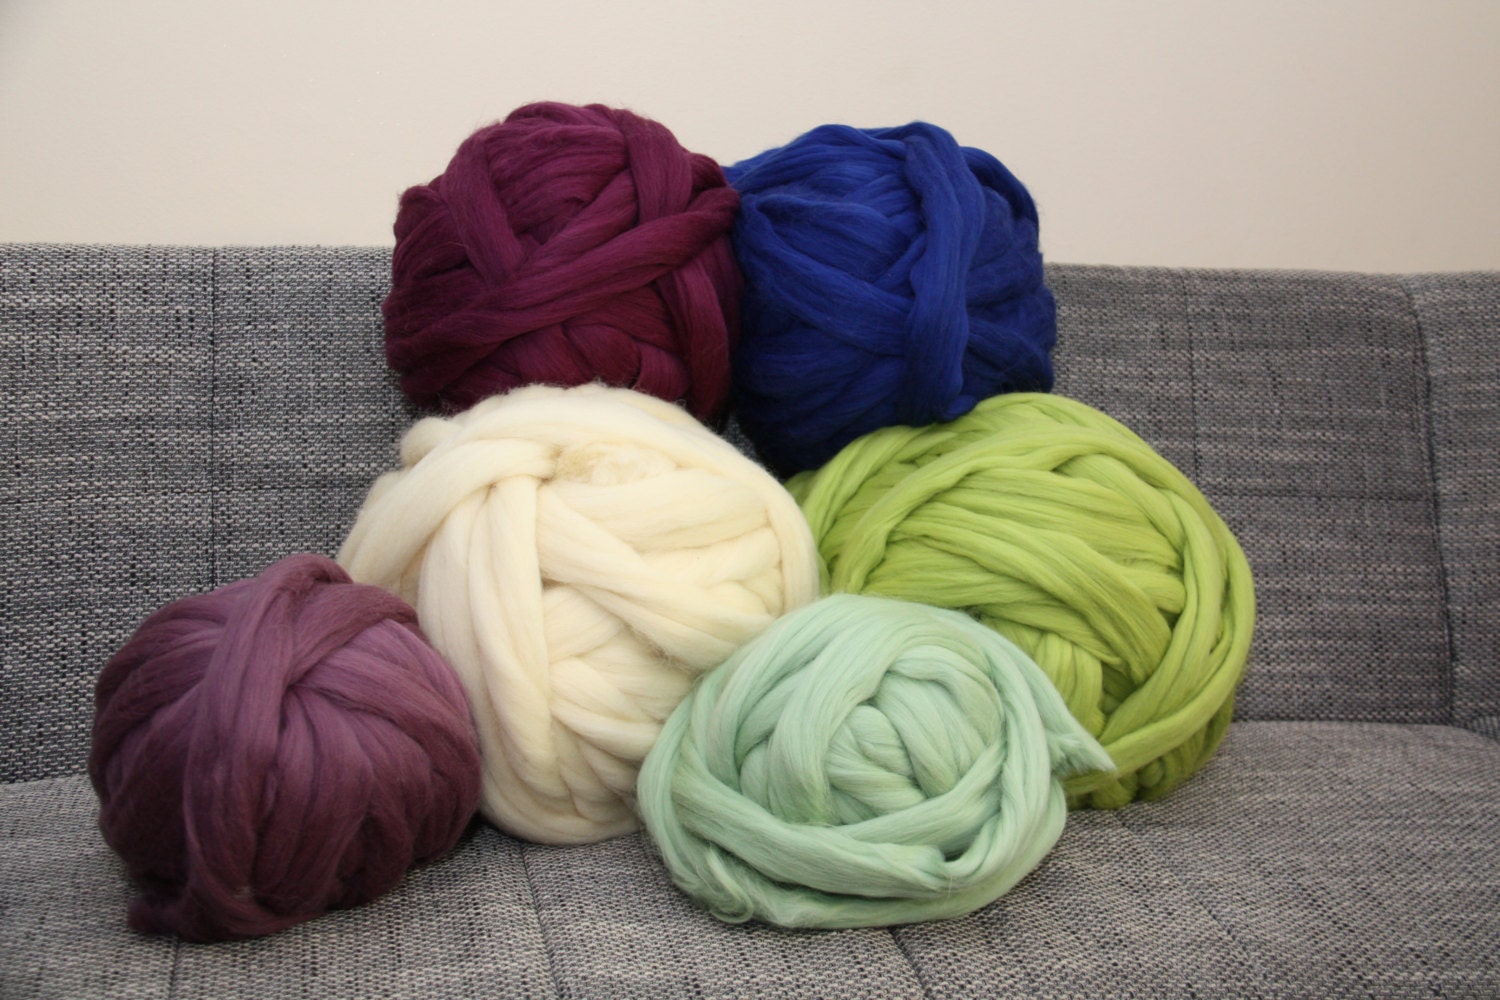  Light Gray Arm Knitting Yarn,1kg/2.2lbs Super Chunky Bulky Yarn, Chunky Wool Yarn,Hand Knit Yarn,Giant Knit Yarn,Bulky Roving Yarn,Extreme  Knitting for Blanket,Rug,Scarf,Cat Bed